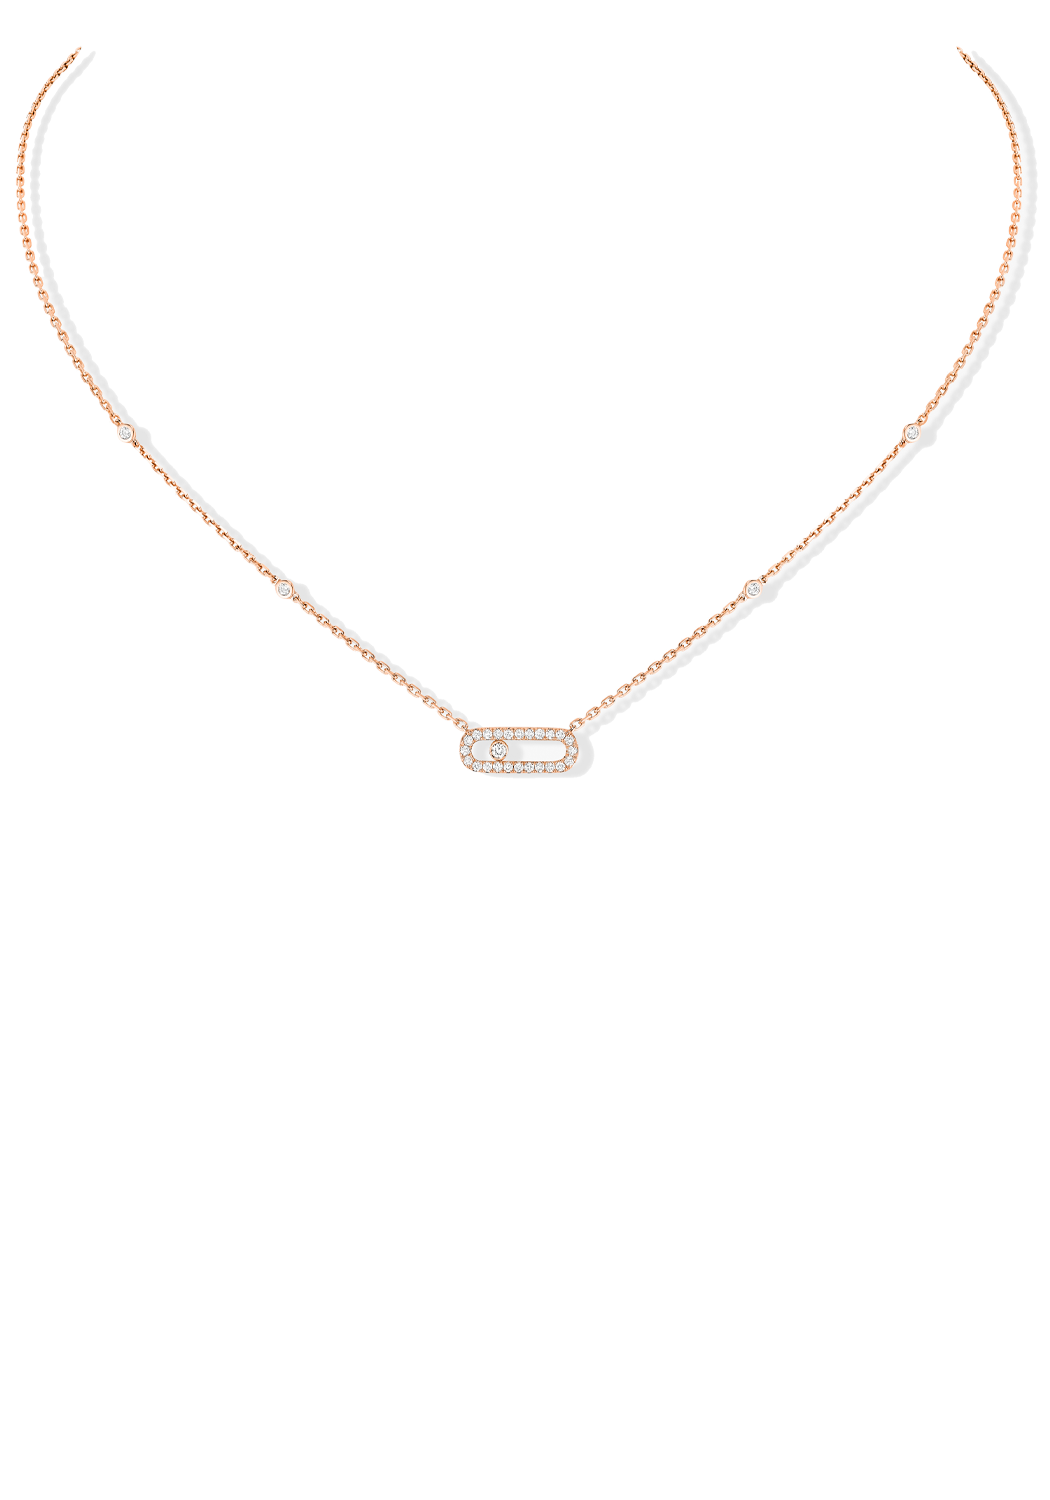 Messika Move Uno Pavé 18KRG Diamond Necklace | Ref. 04708-PG | OsterJewelers.com